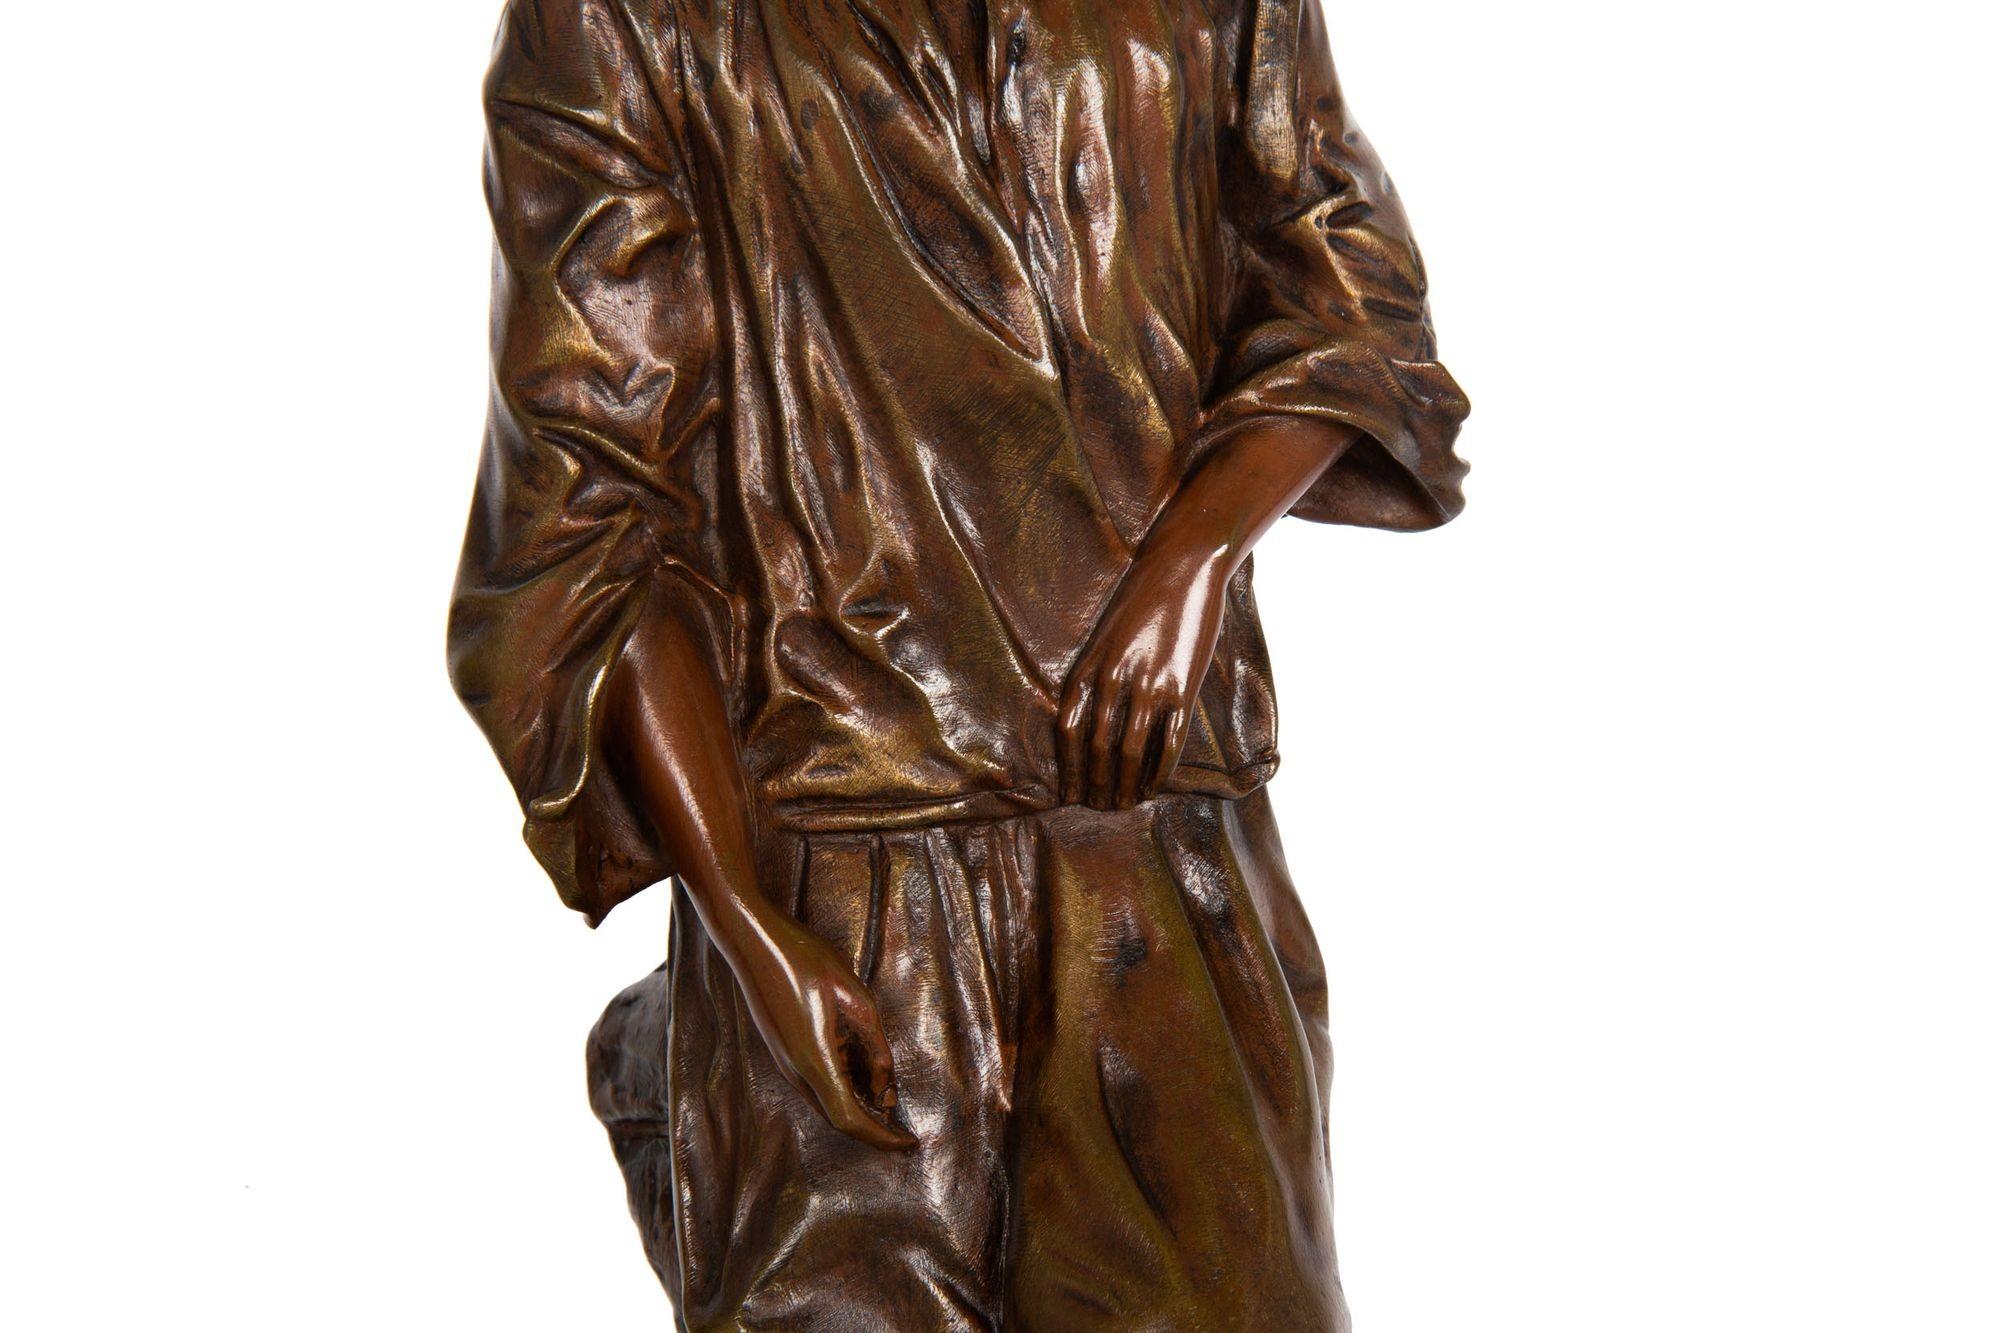 French Orientalist Antique Bronze Sculpture by Edouard Drouot of Shoeshine Boy For Sale 3